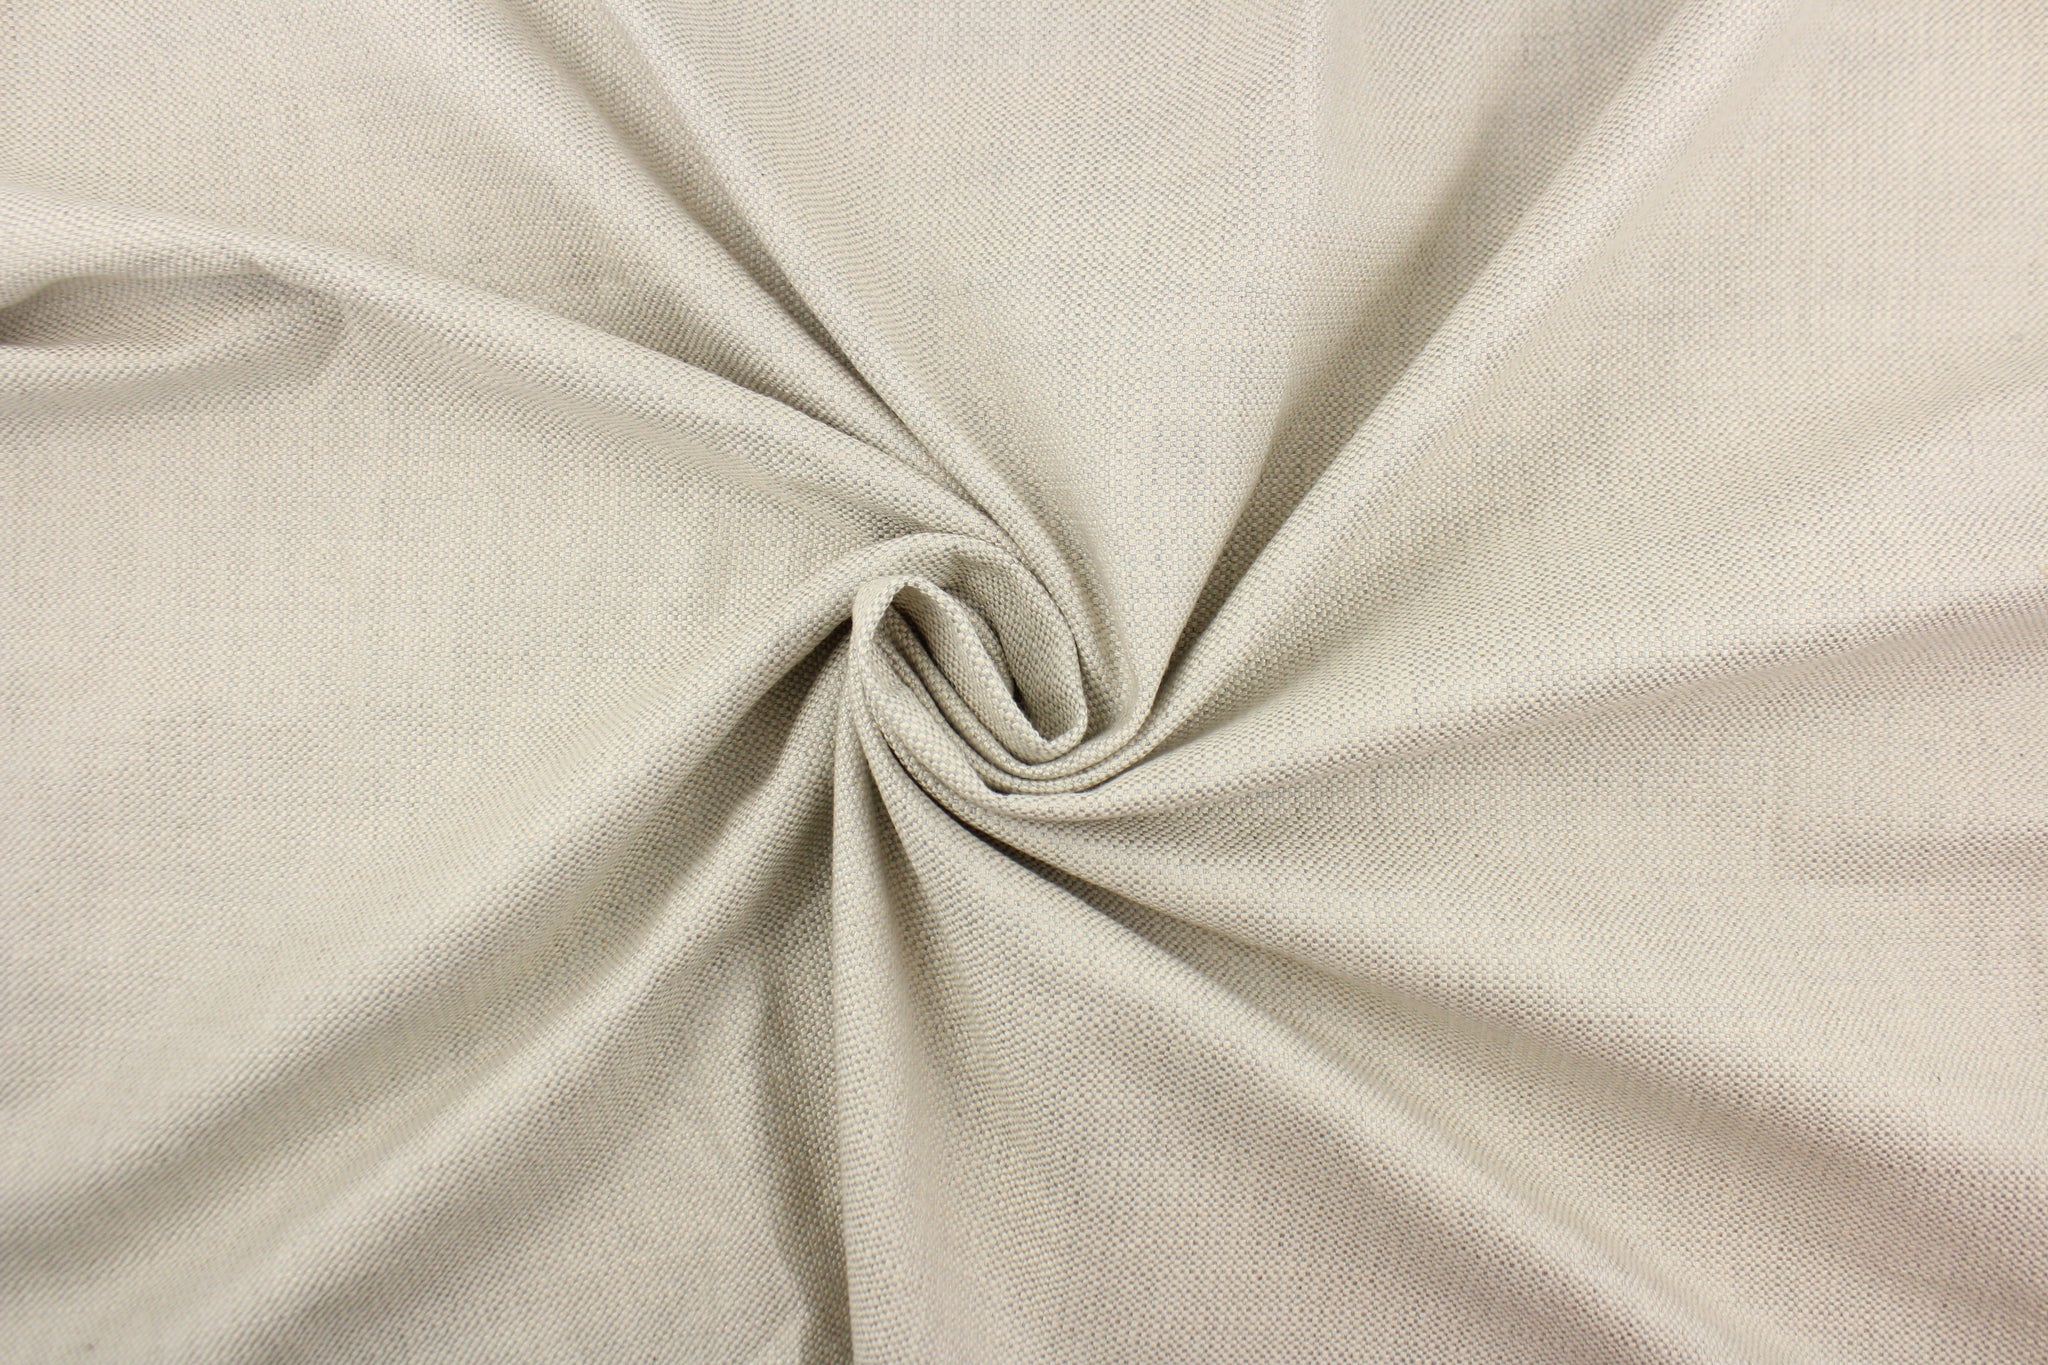 Linen Cotton Cream Beige Floral Print Upholstery Drapery Fabric FB